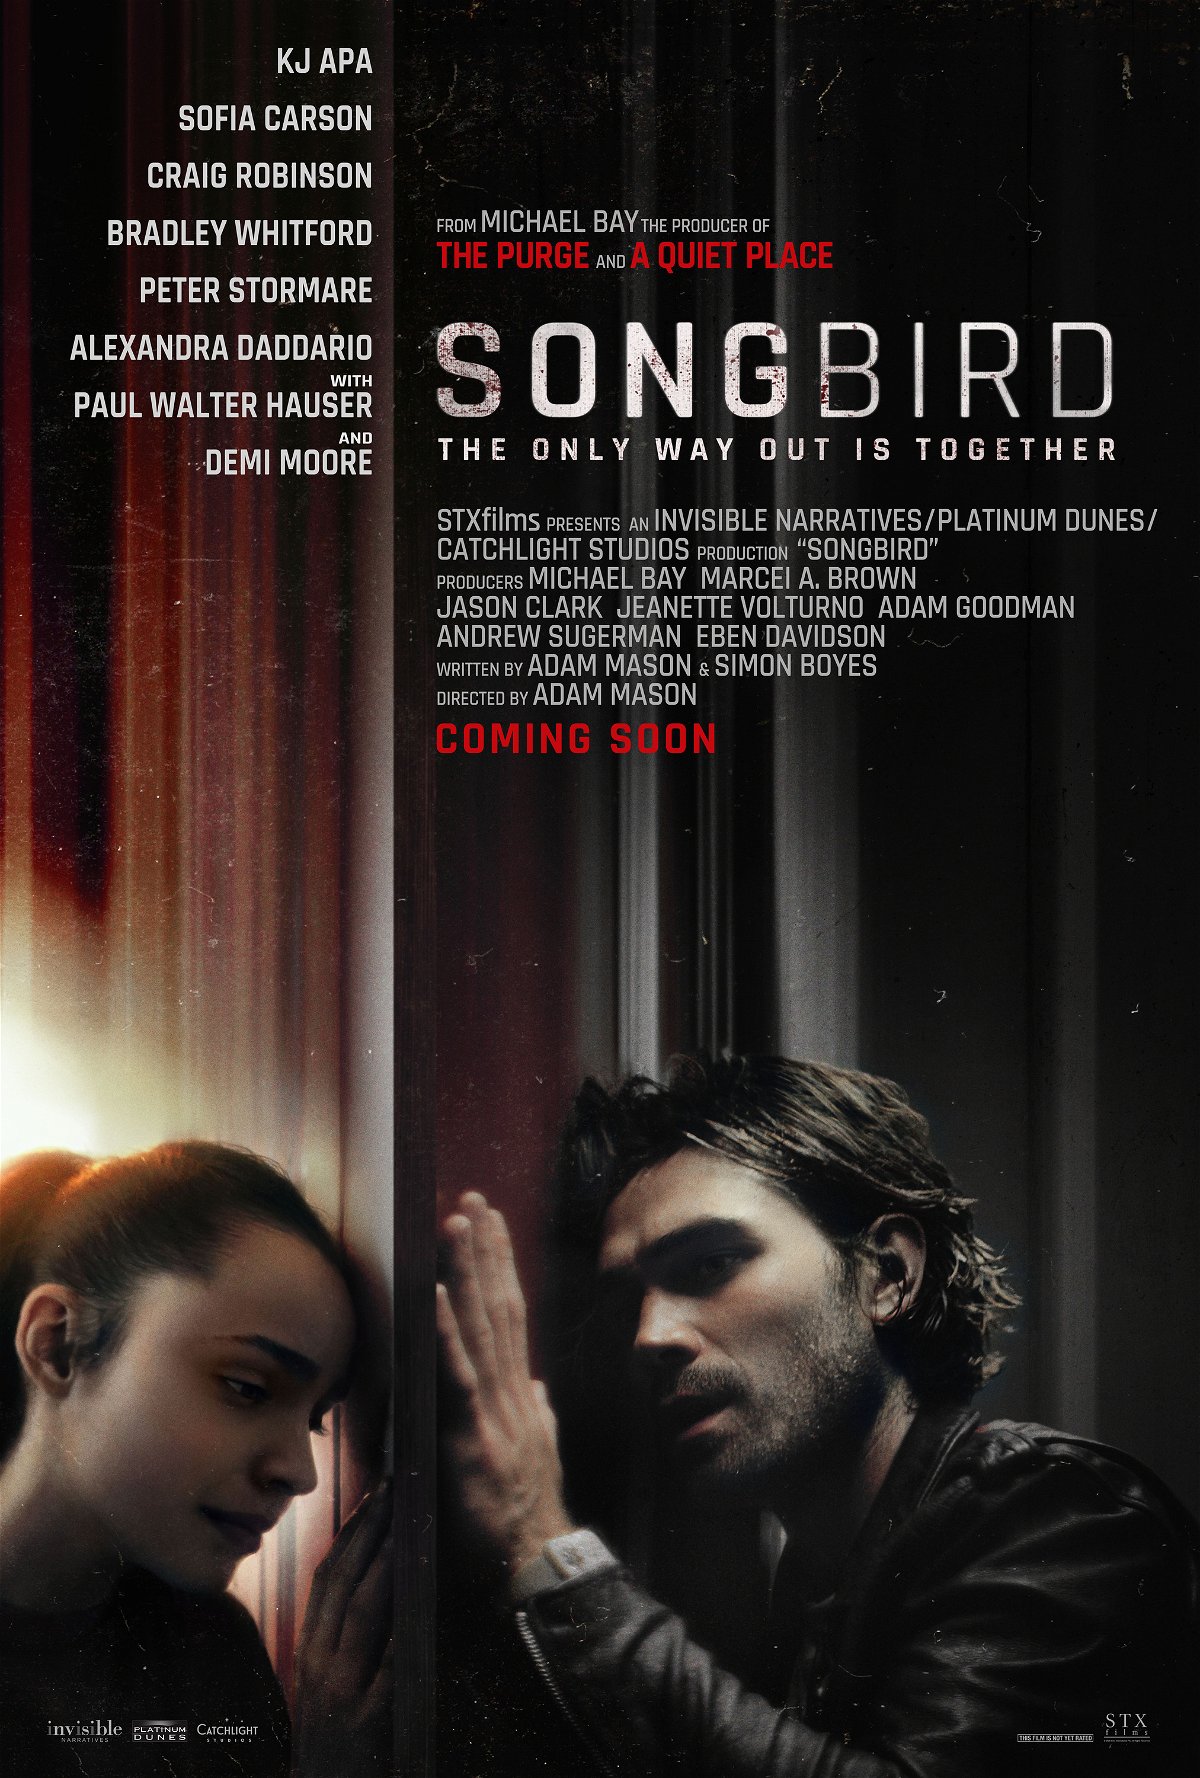 I due innamorati protagonisti di Songbird